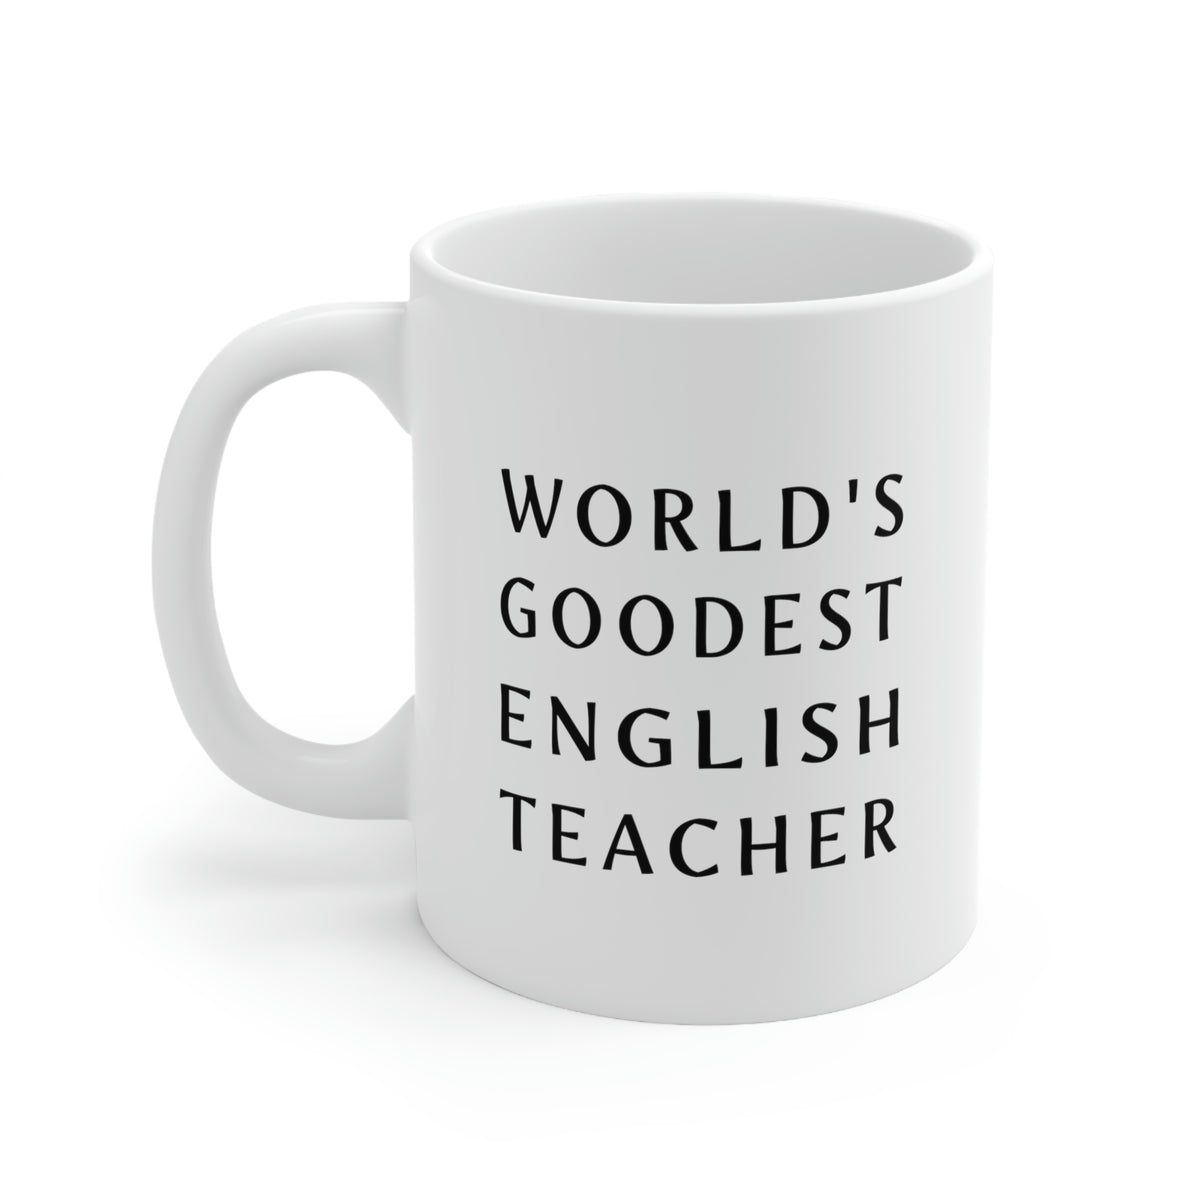 Funny English Teacher Coffee Mug - World's goodest English Teacher Cup - Fun Gifts for Best Expletive Grammar